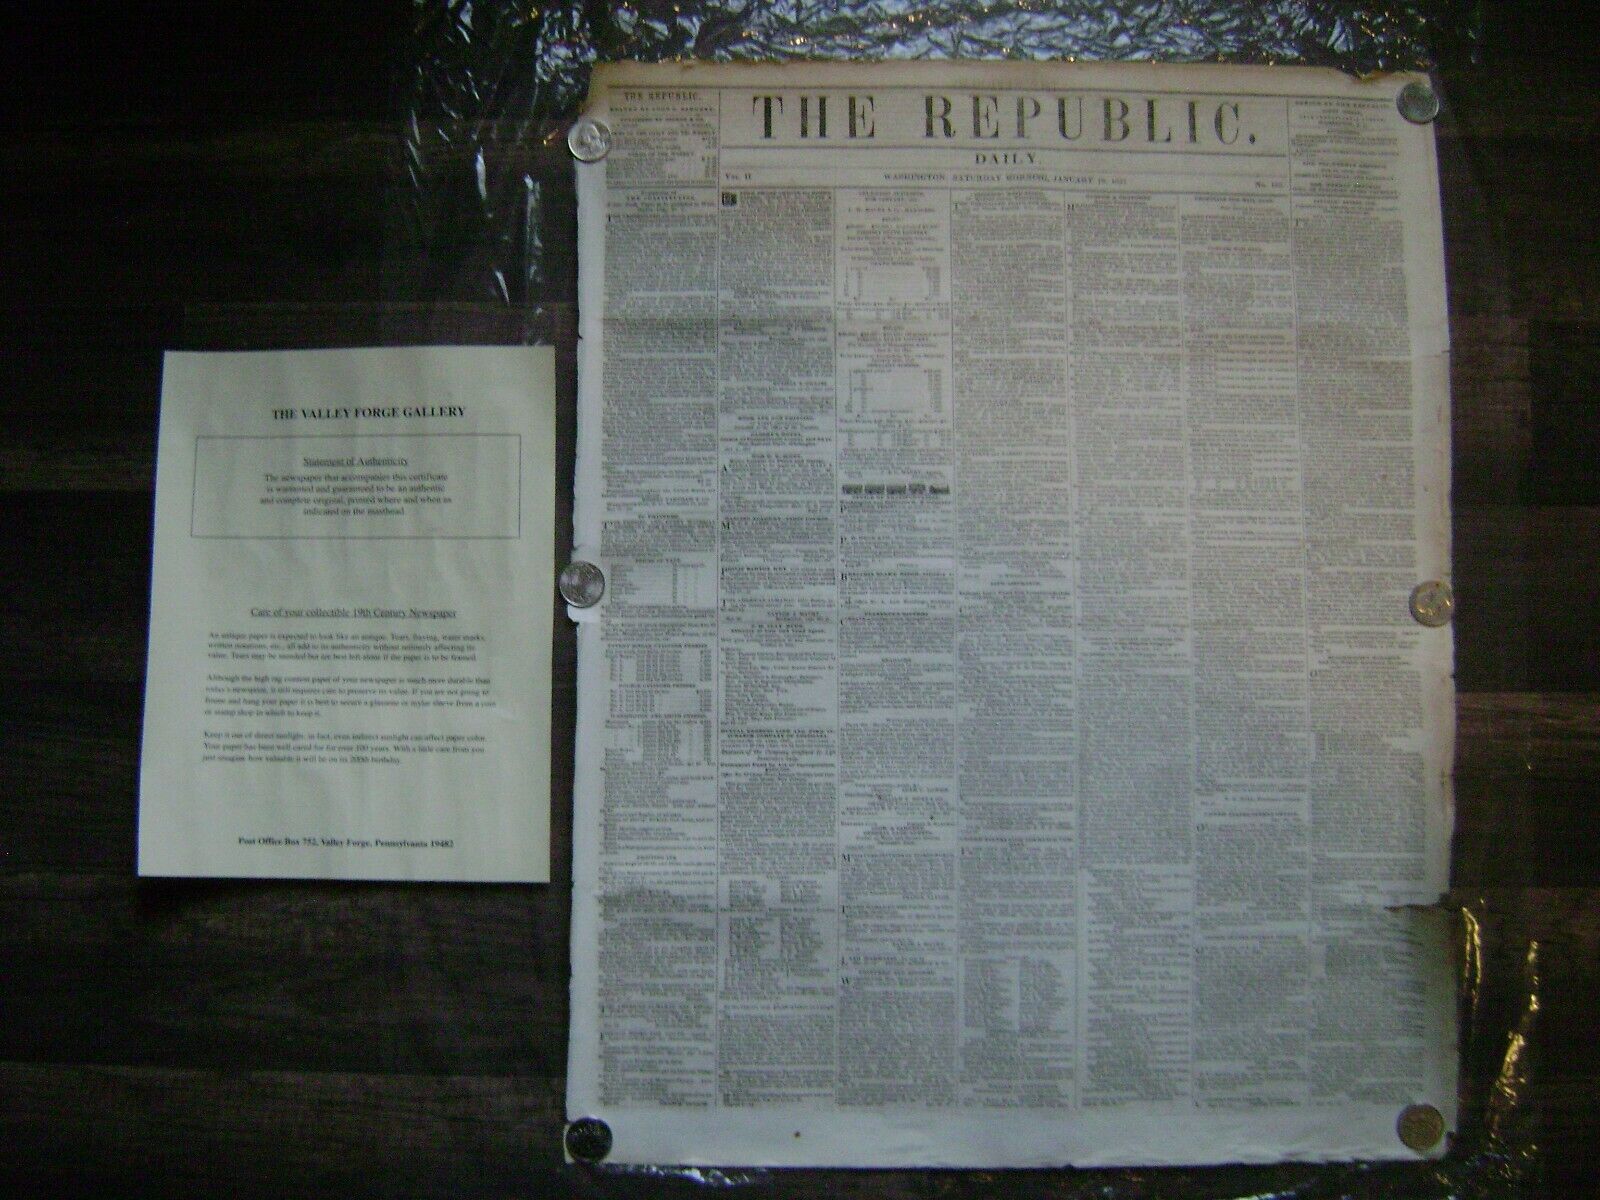 VINTAGE JANUARY 18th 1851 THE REPUBLIC DAILY NEWSPAPER WASHINGTON D.C.  